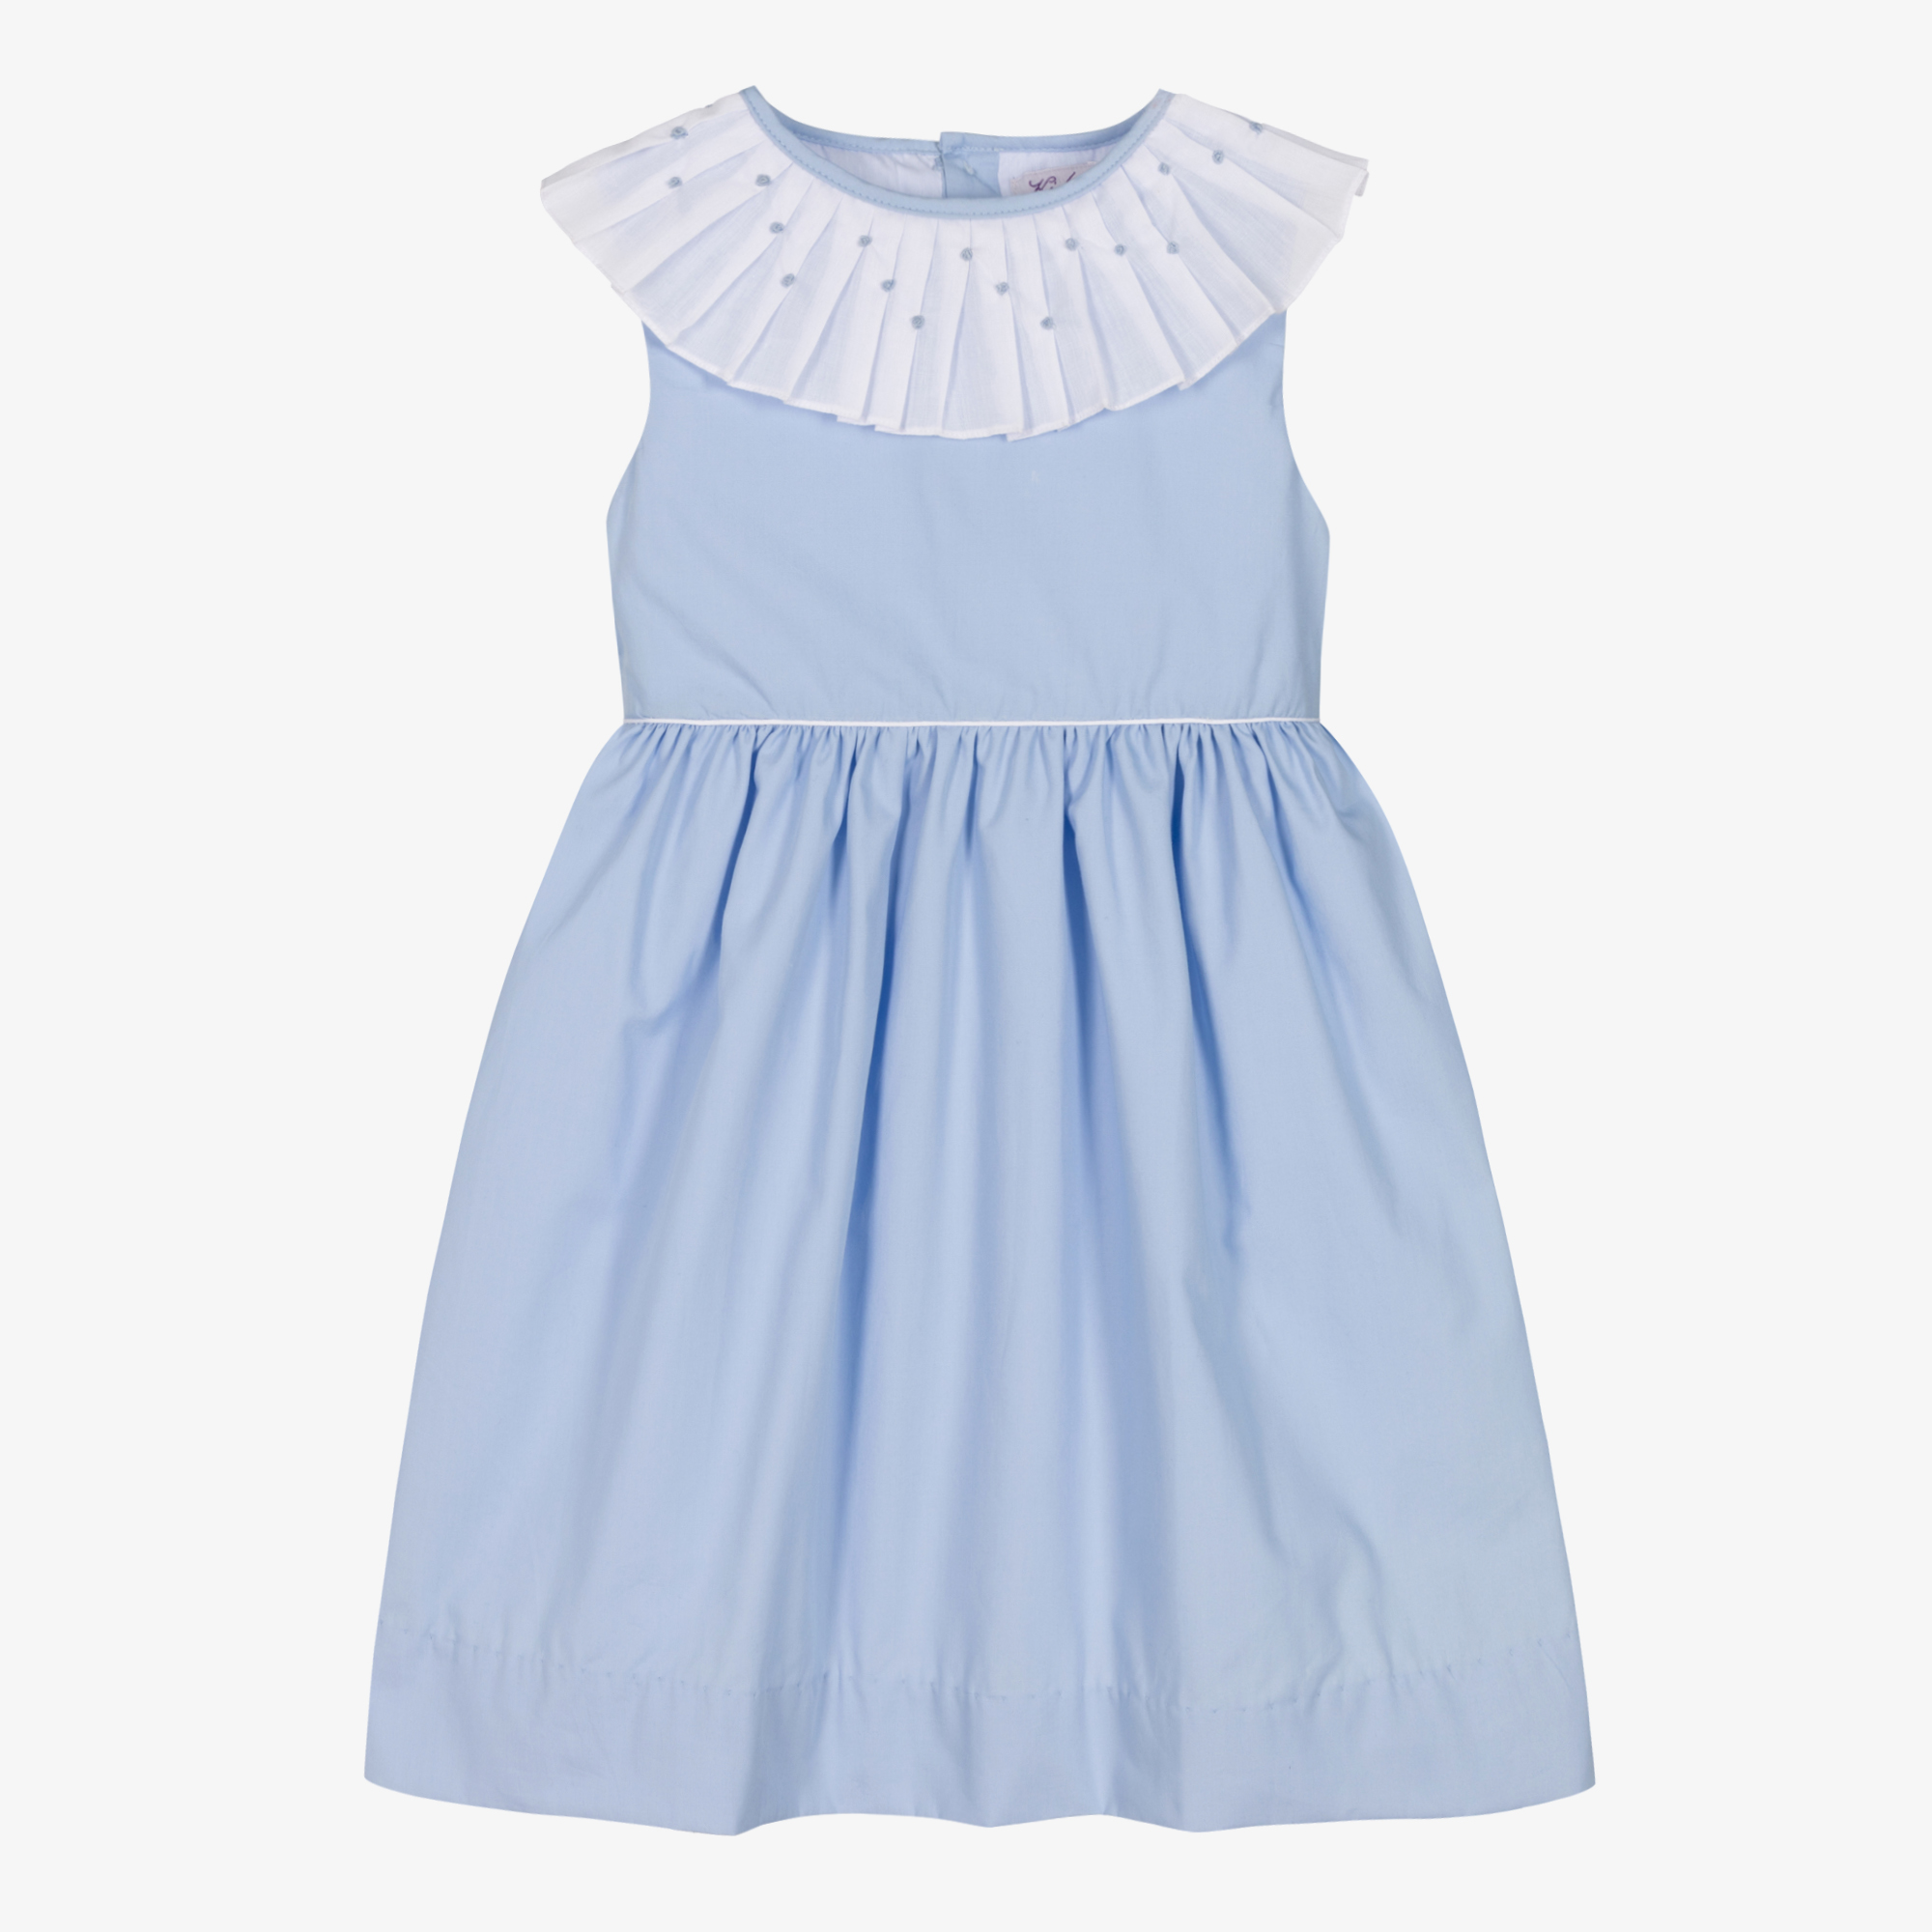 Kidiwi - Girls Blue Pleated Collar Cotton Dress